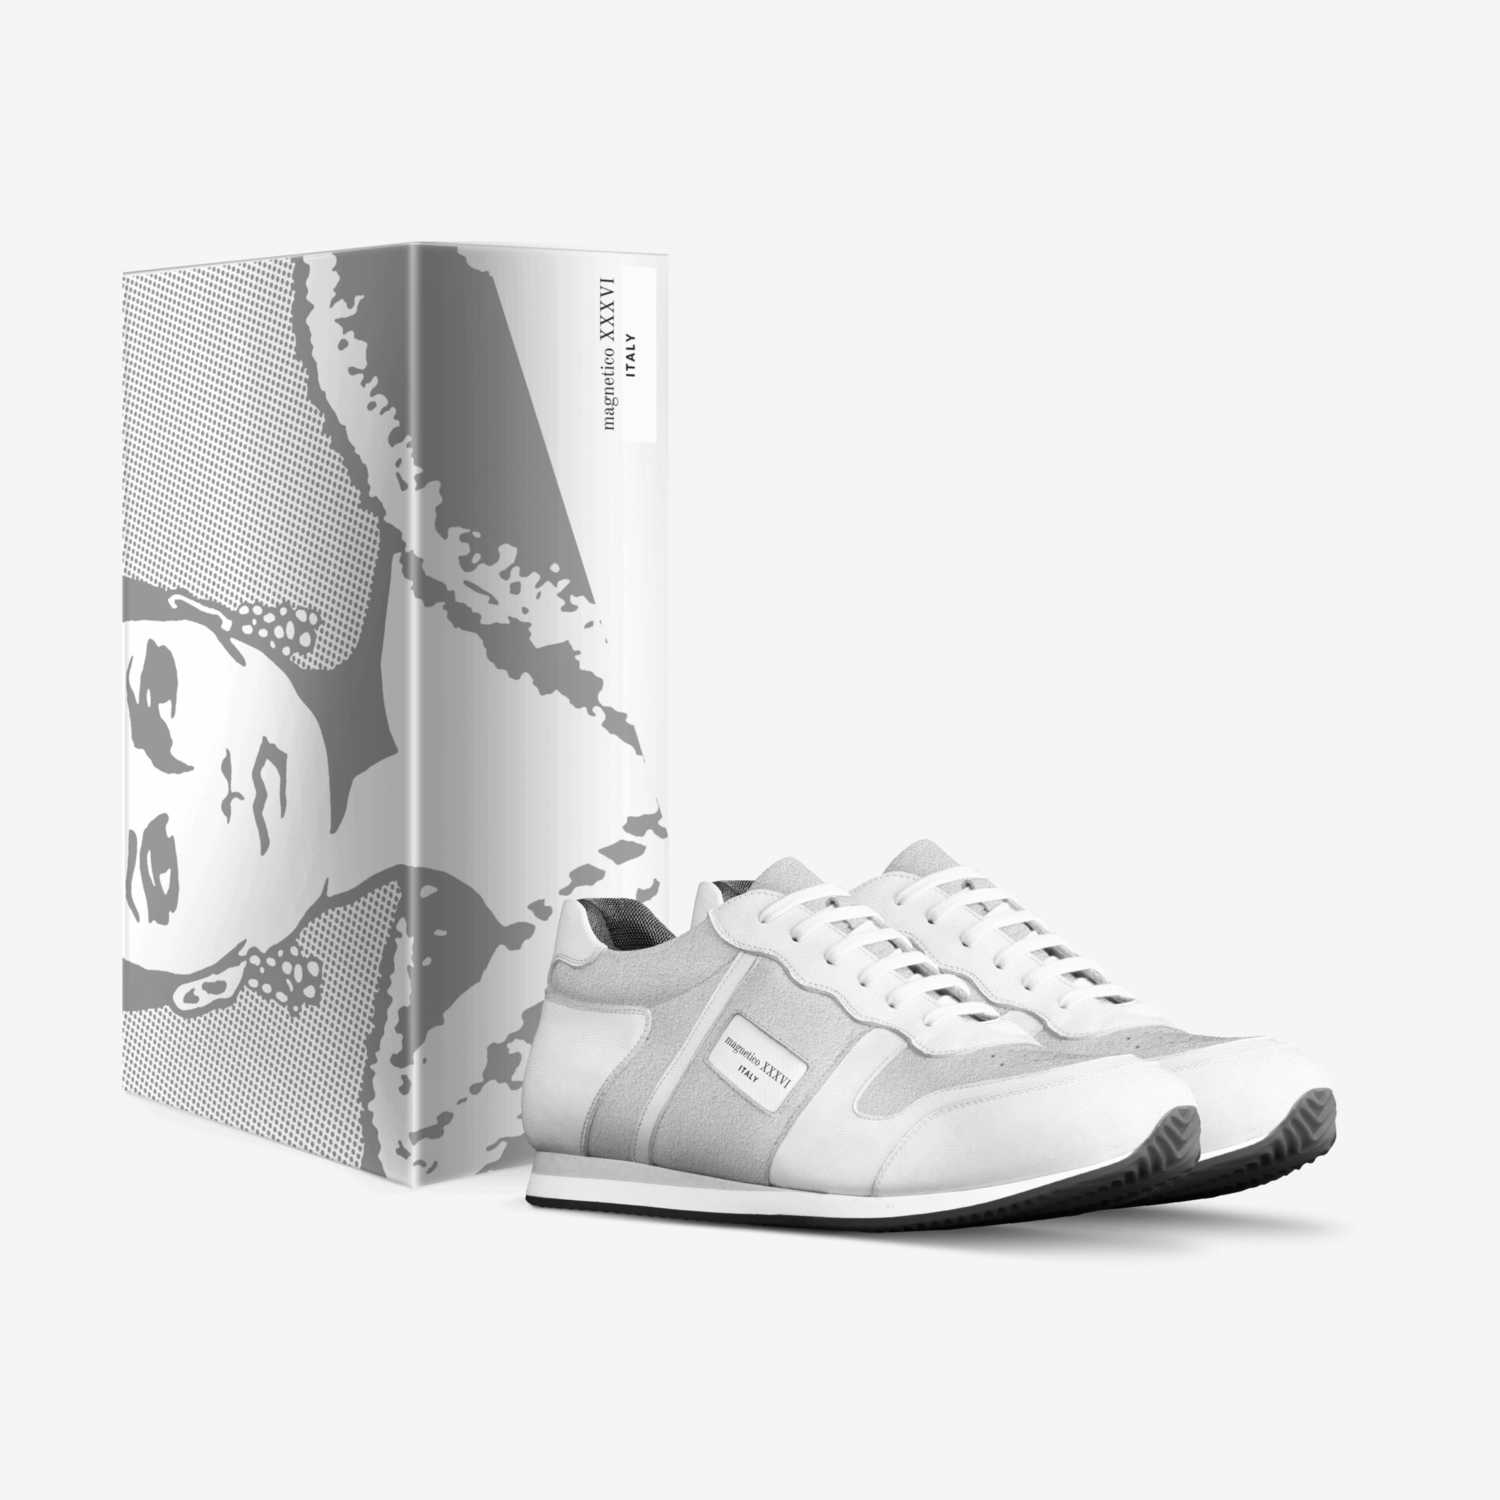 magnetico XXXVI IV custom made in Italy shoes by Jesús Sandoval | Box view